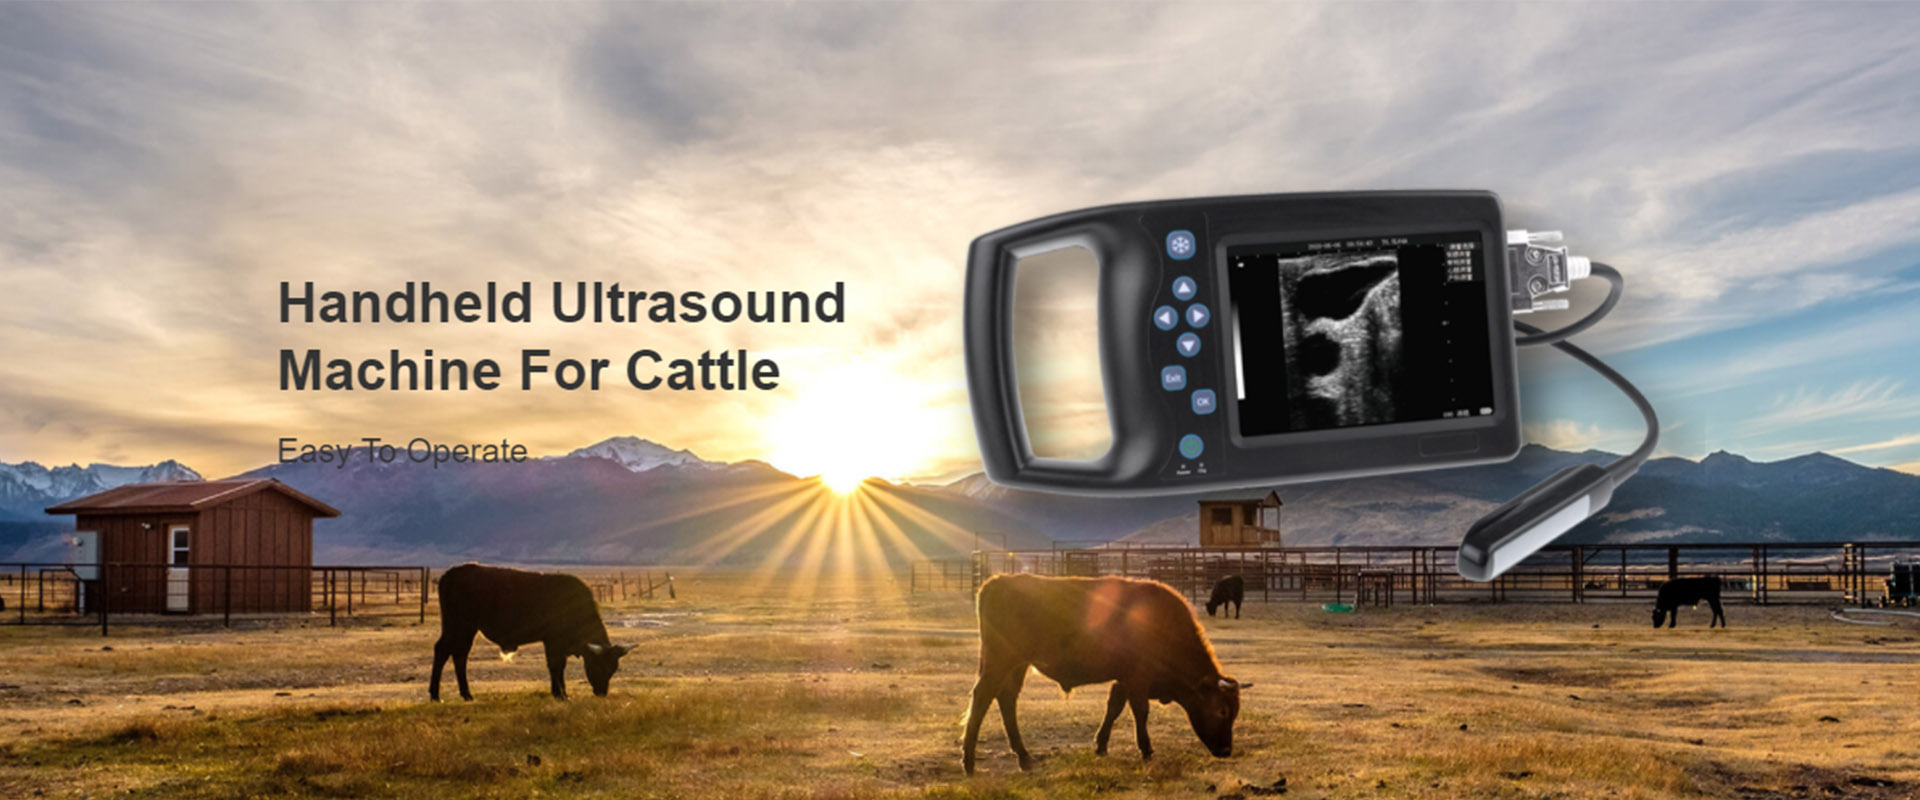 Scanner de ultrassom portátil para gado Ruisheng A8